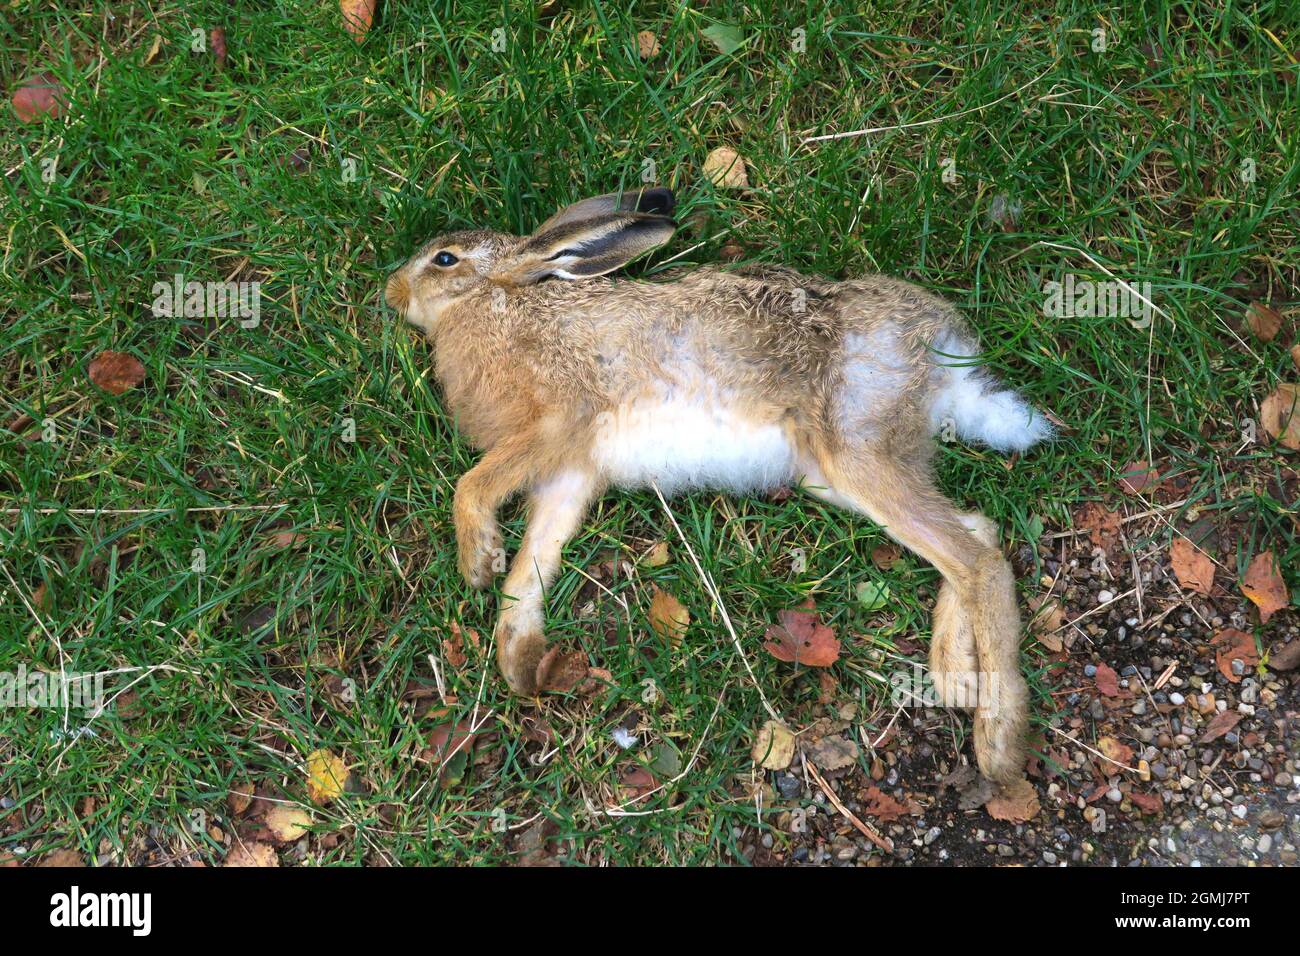 Hare dead from myxomatosis symptom Stock Photo